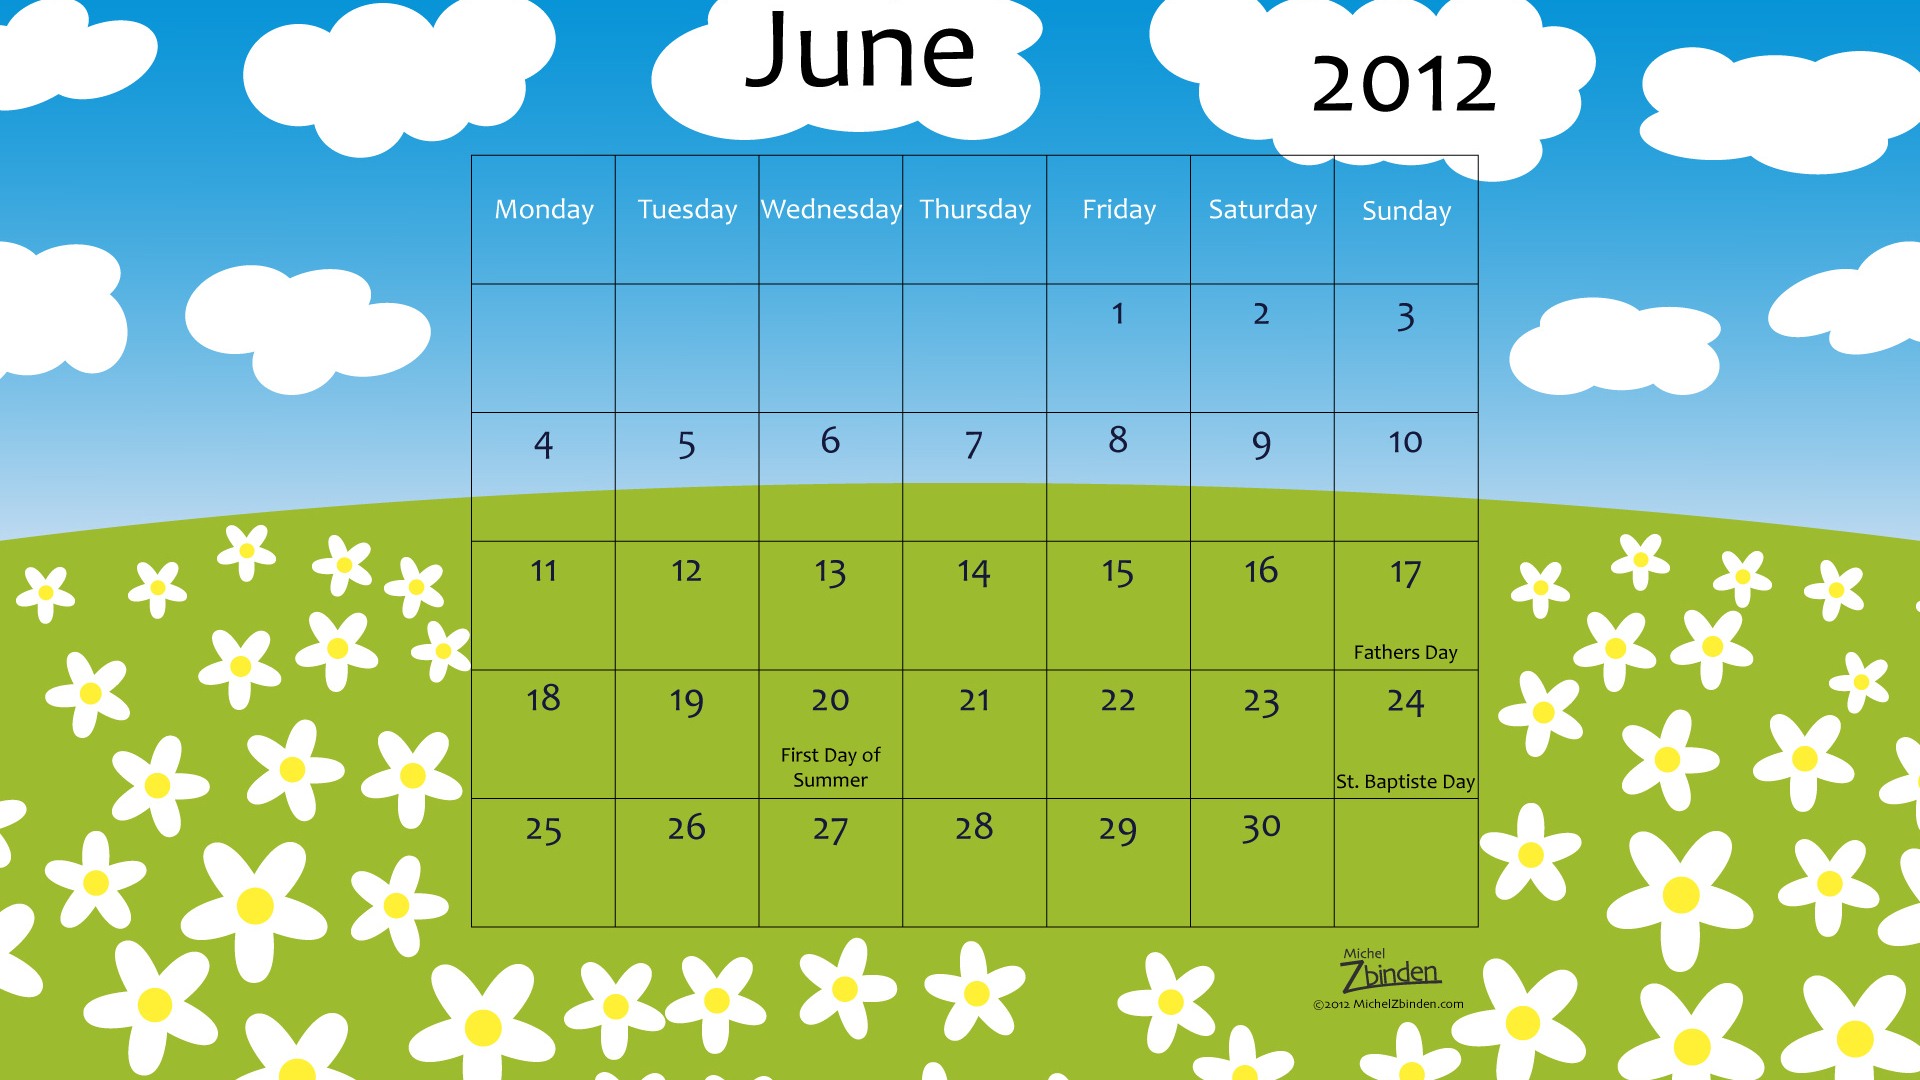 June 2012 Calendar wallpapers (1) #2 - 1920x1080